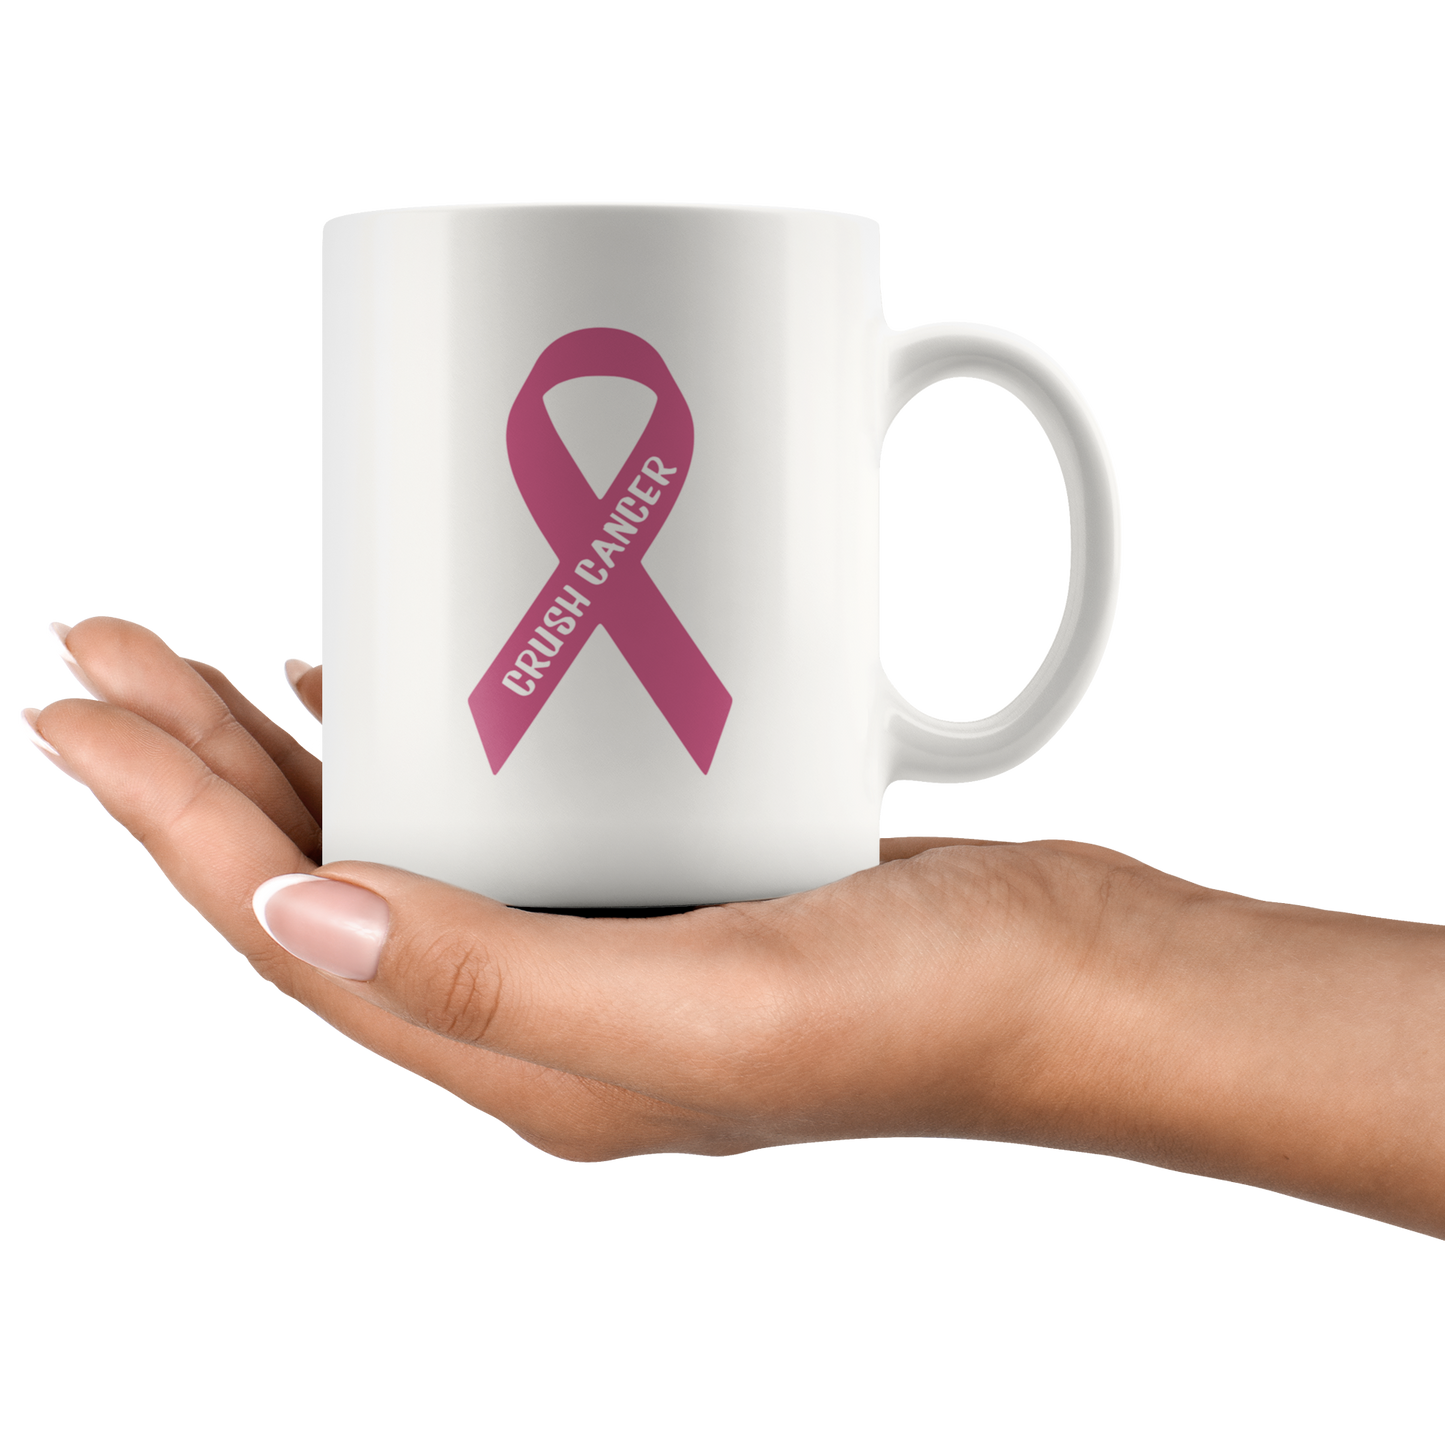 Cancer survivor mug gift for women cancer gifts for women ceramic coffee mug cancer ribbon mug